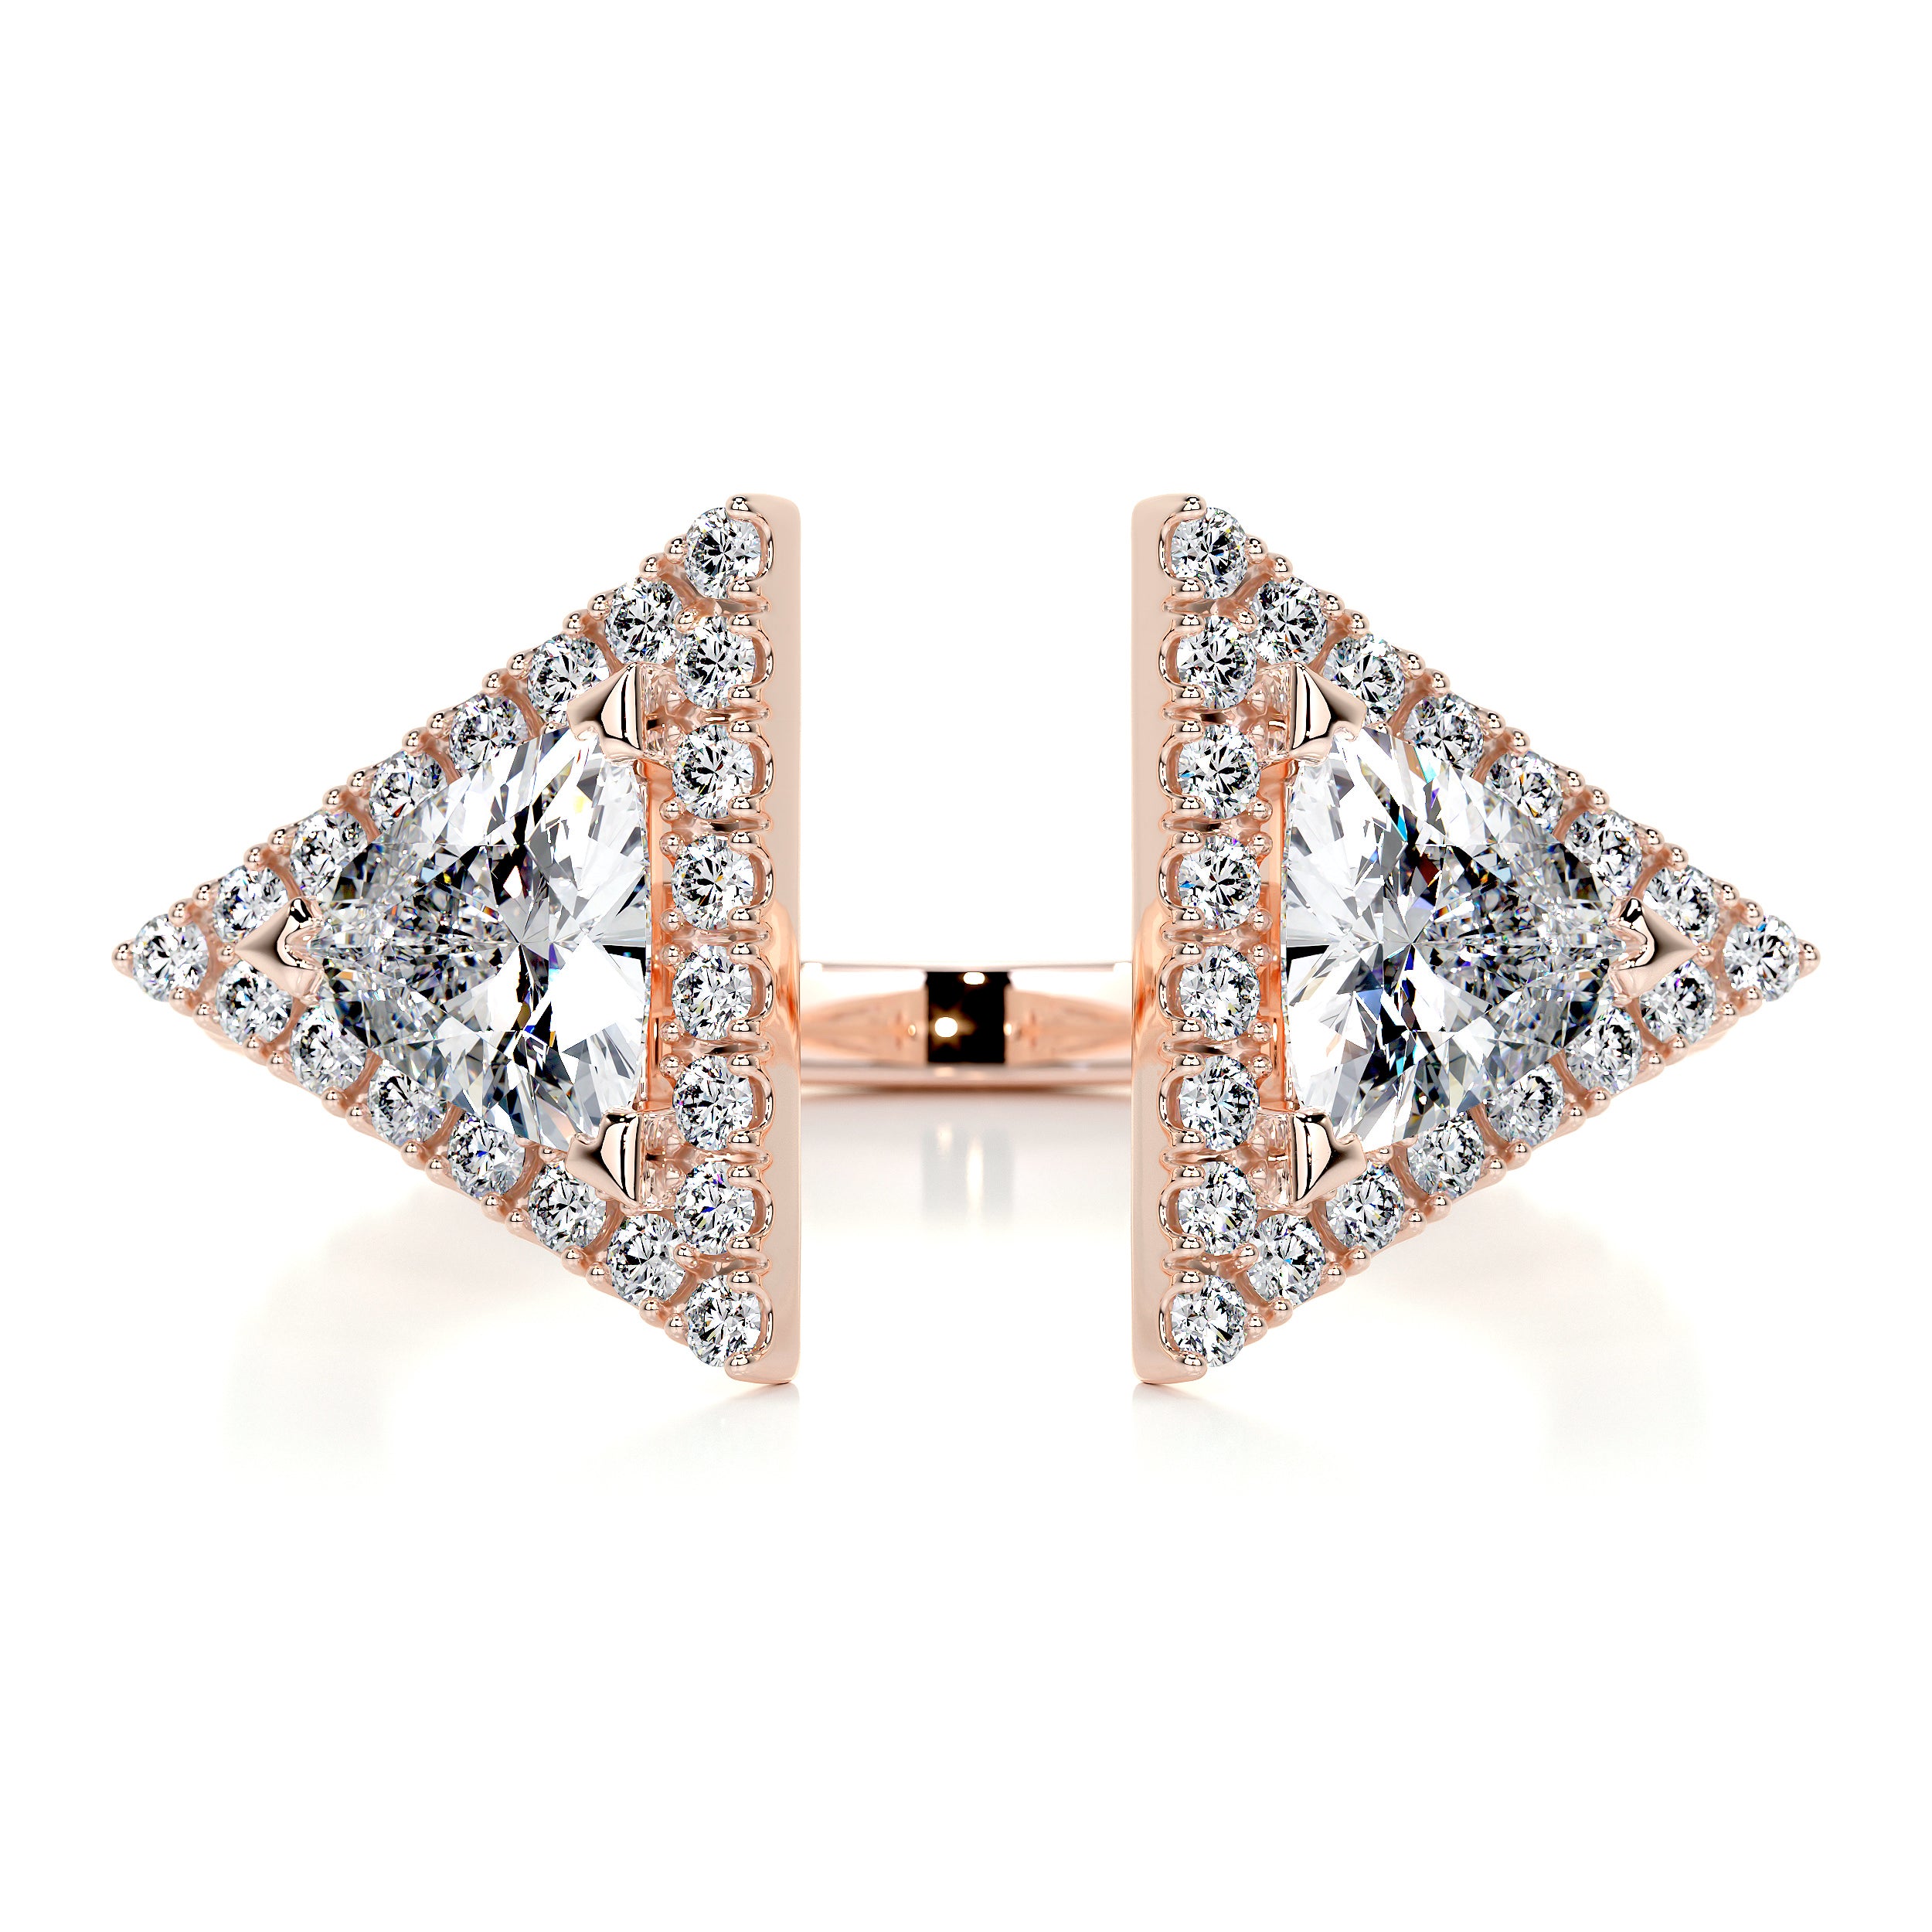 Olivia Fashion Diamond Ring   (1 carat) -14K Rose Gold